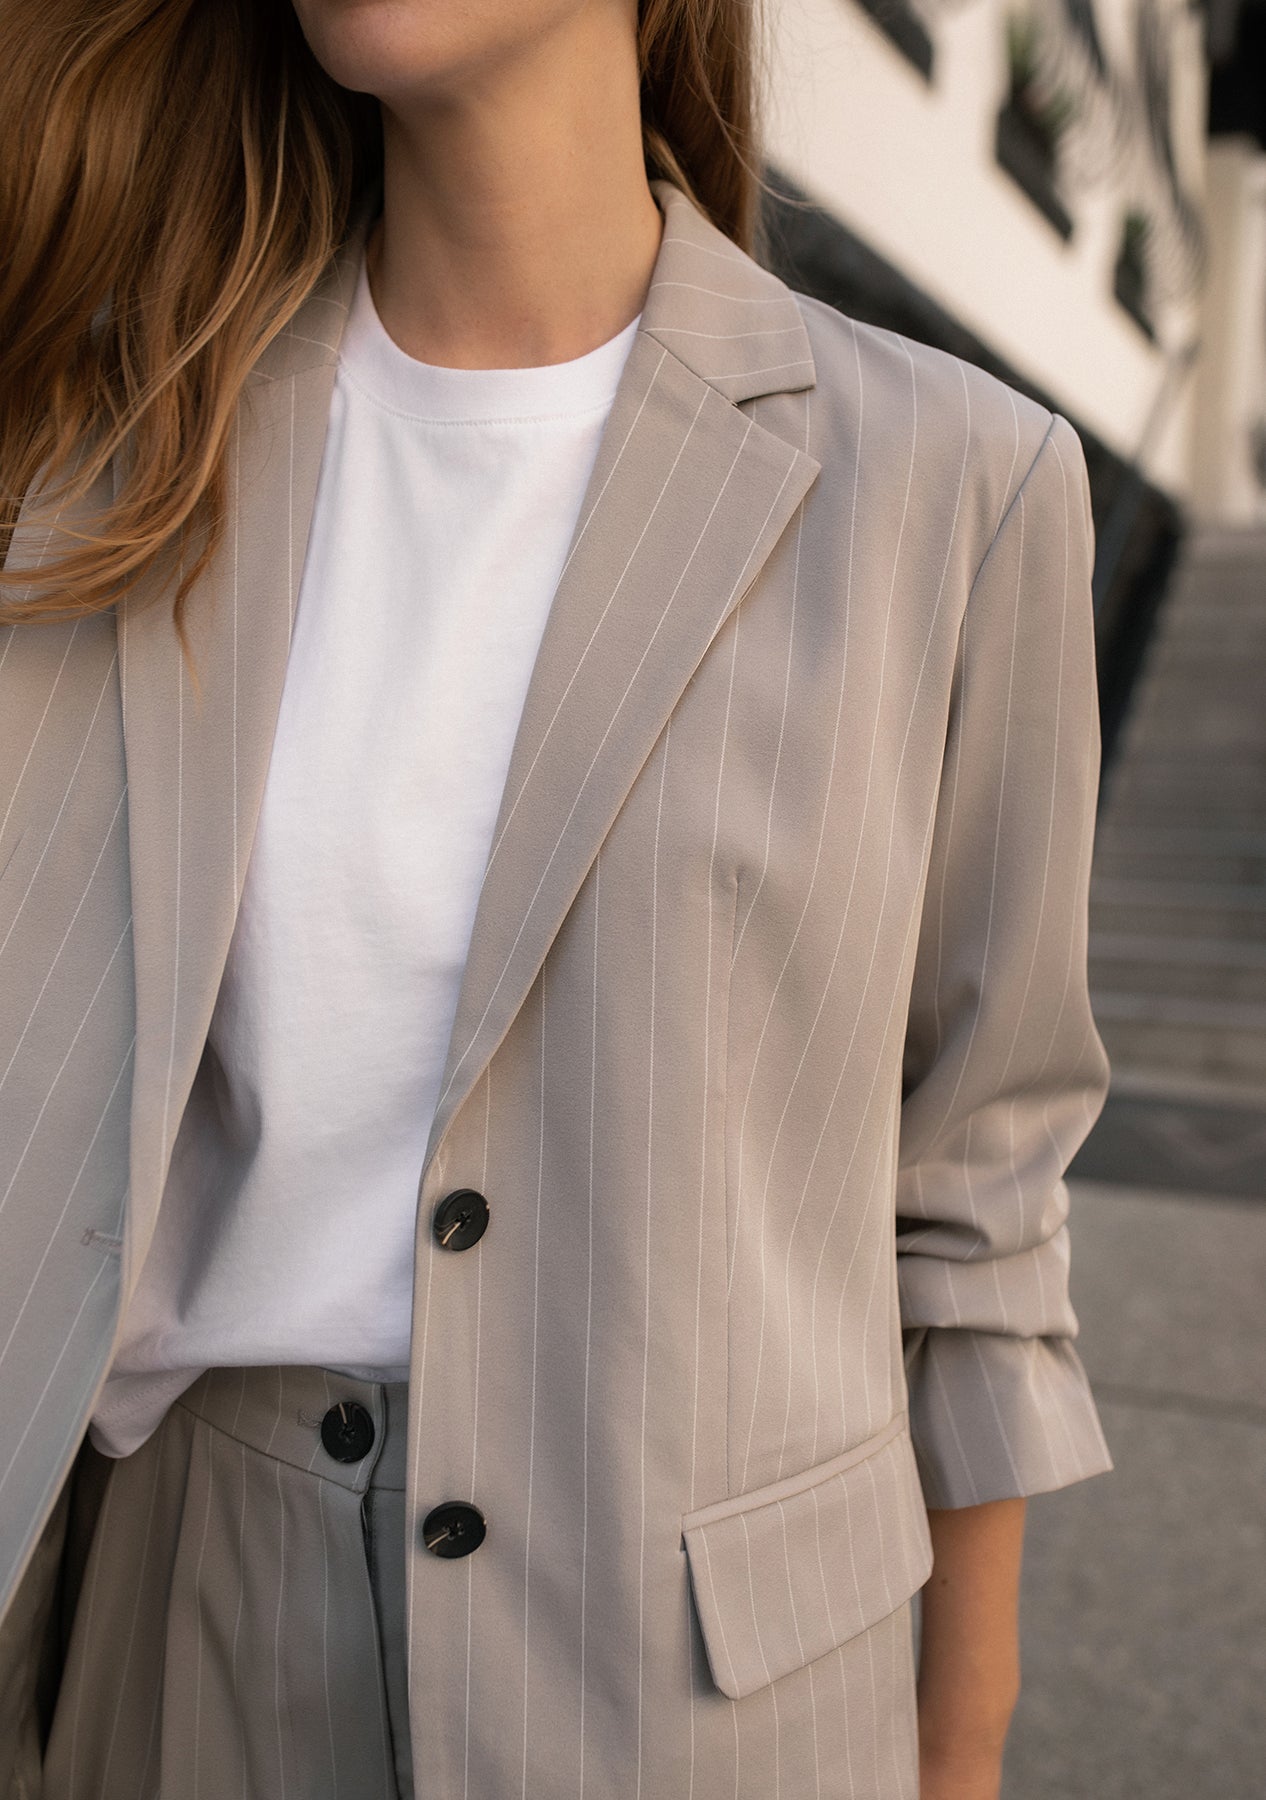 Shop Stylish Long Blazer for Women – Women's Blazer Sale